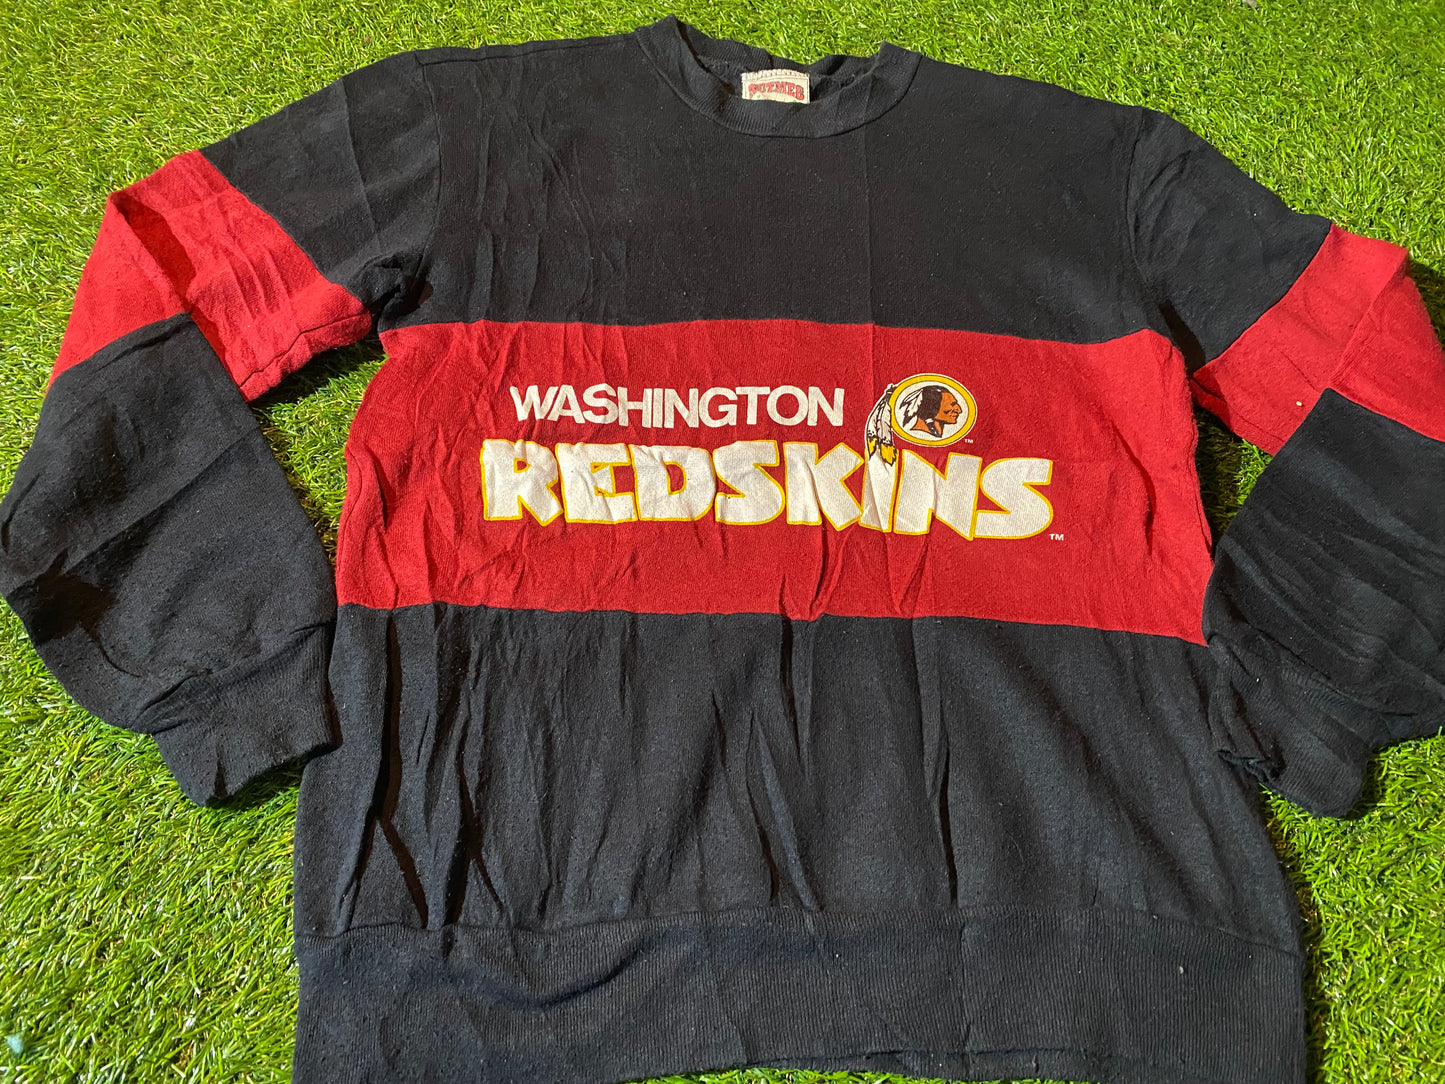 Washington Redskins USA NFL American Football Vintage Small Mans Nutmeg Top / Sweater